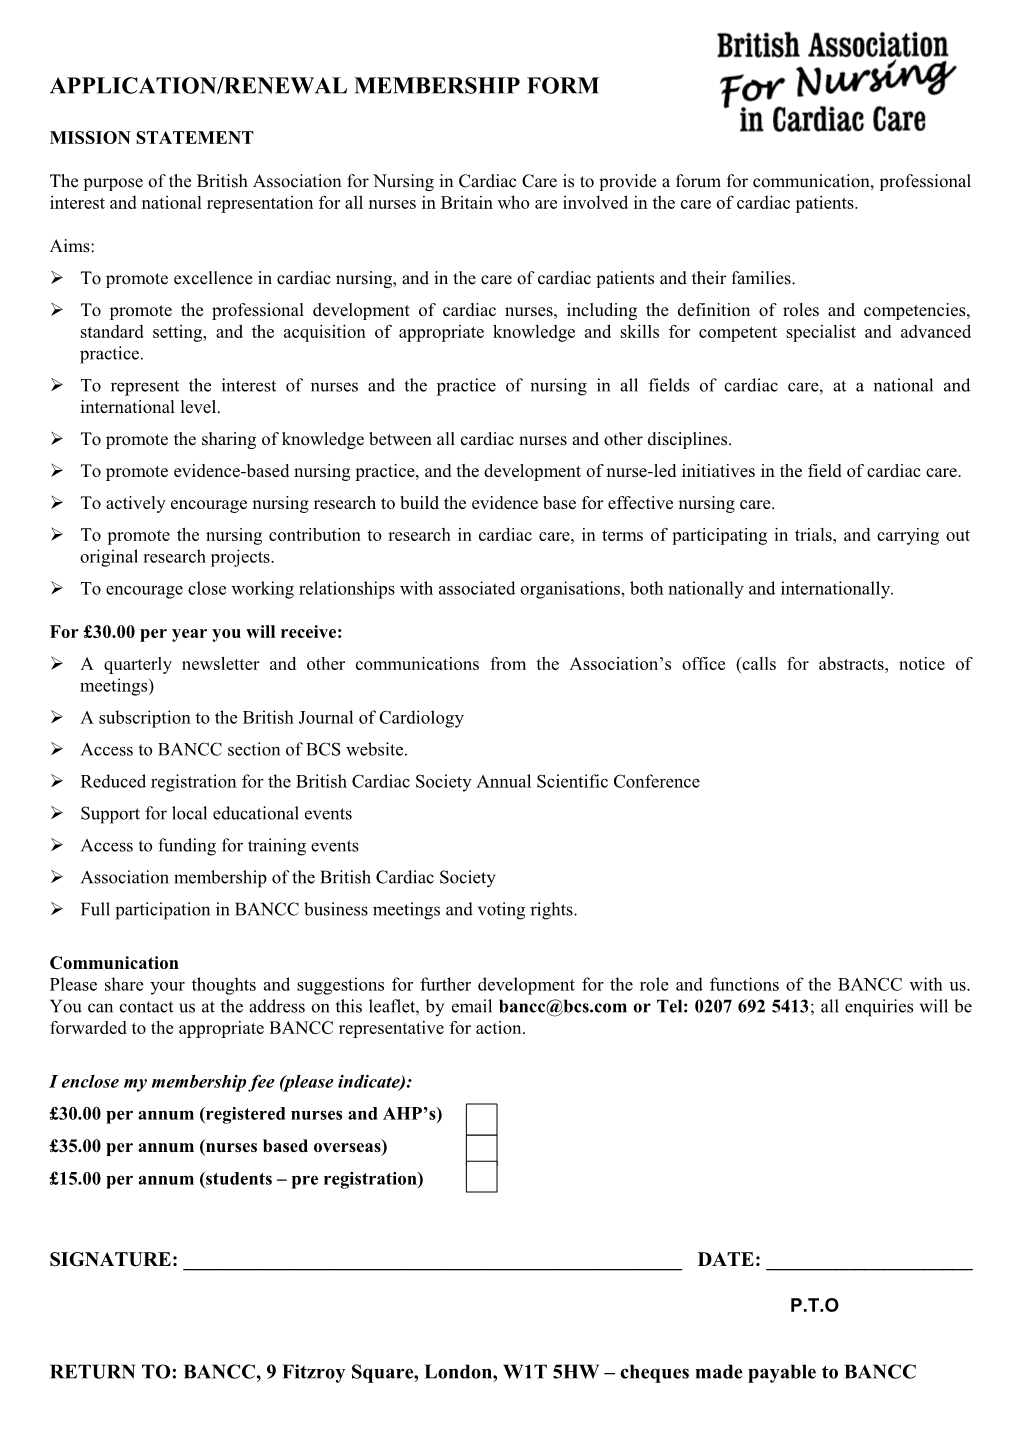 Application/Renewal Membership Form